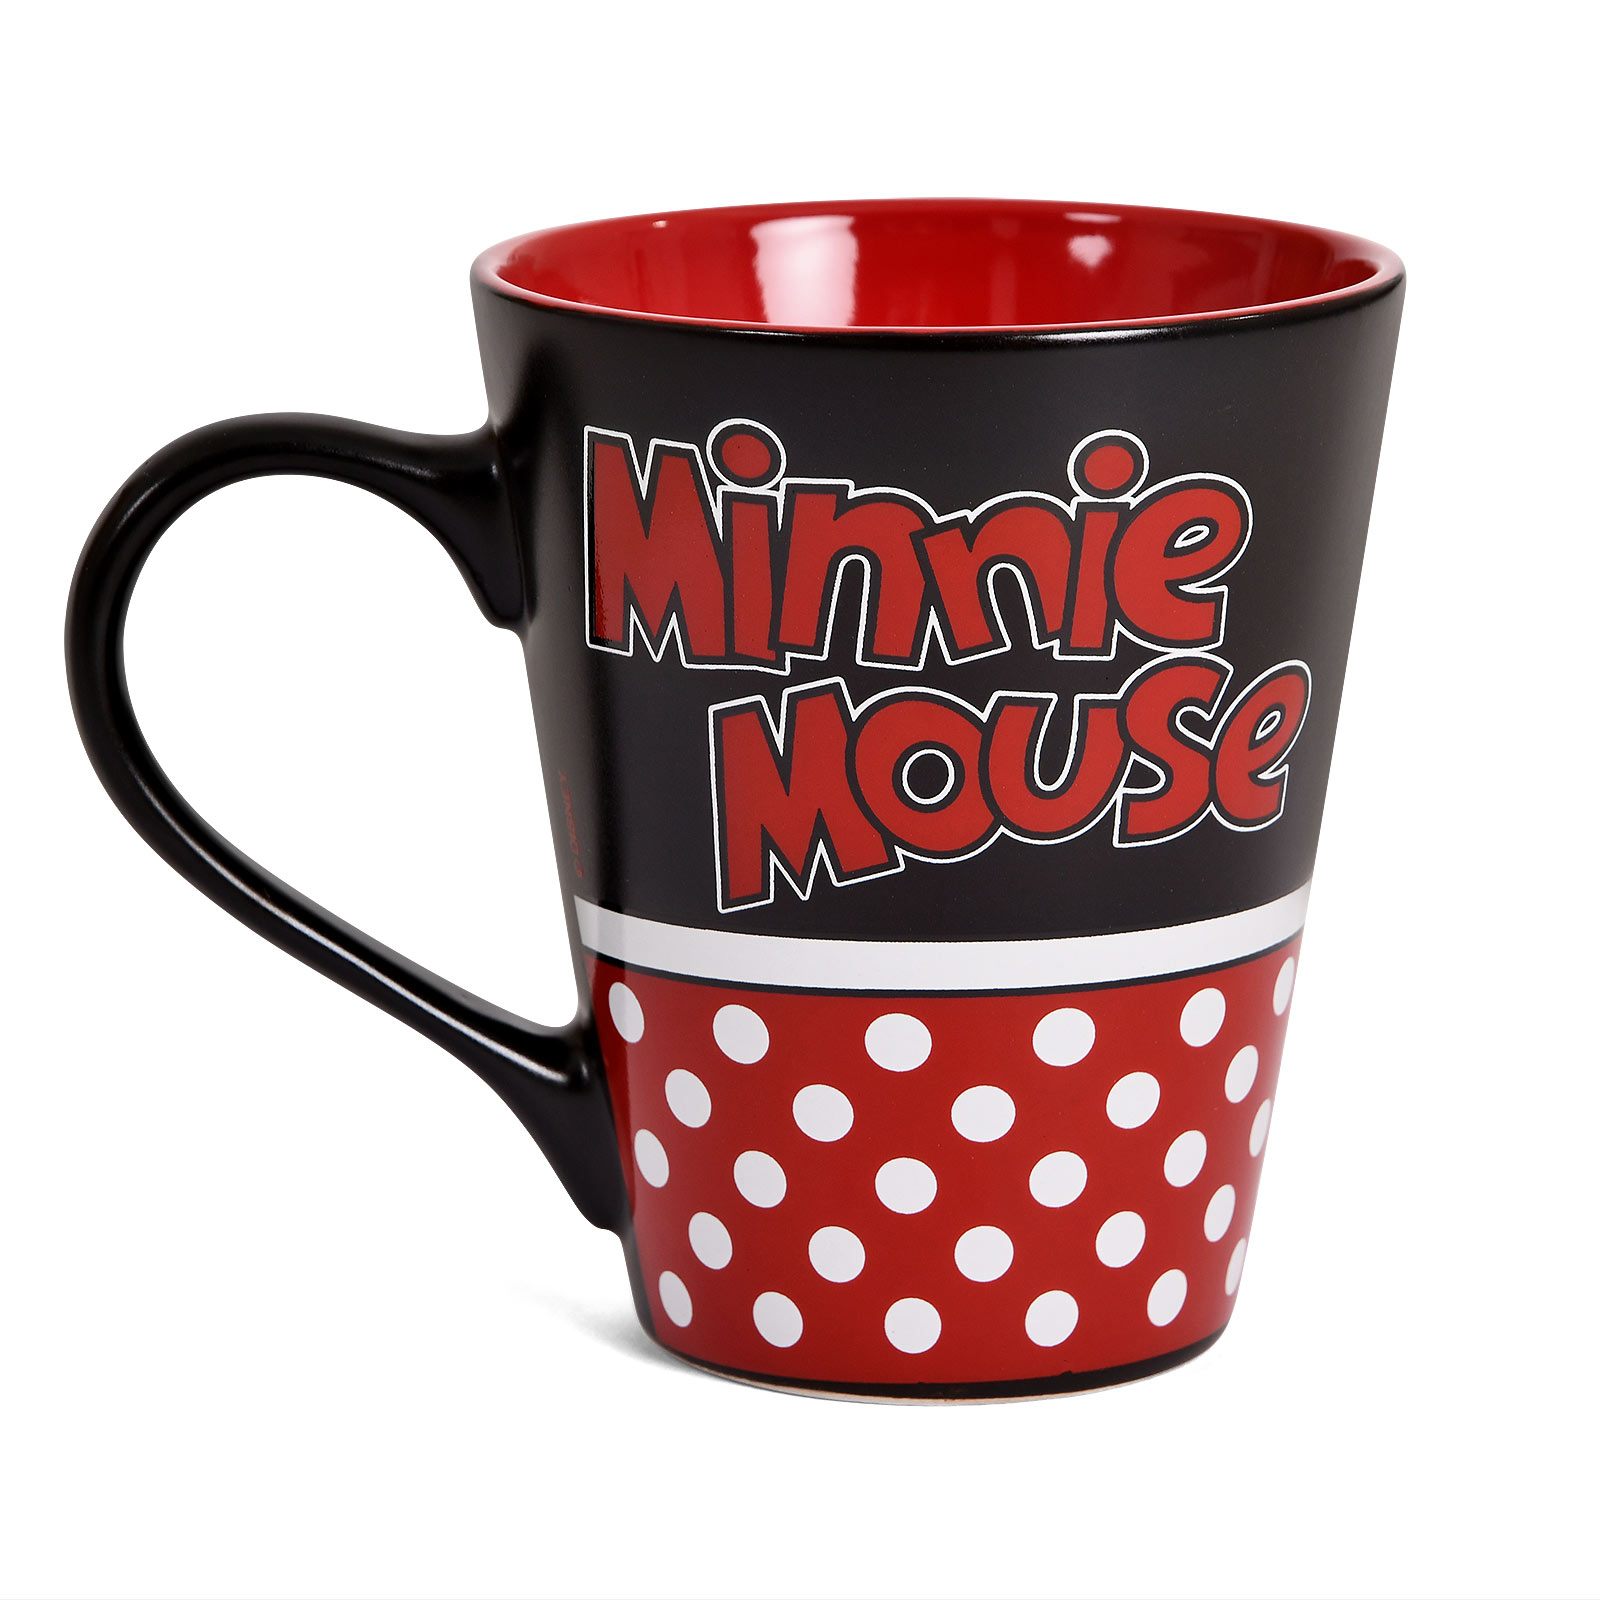 Disney - Minnie Mouse Mug